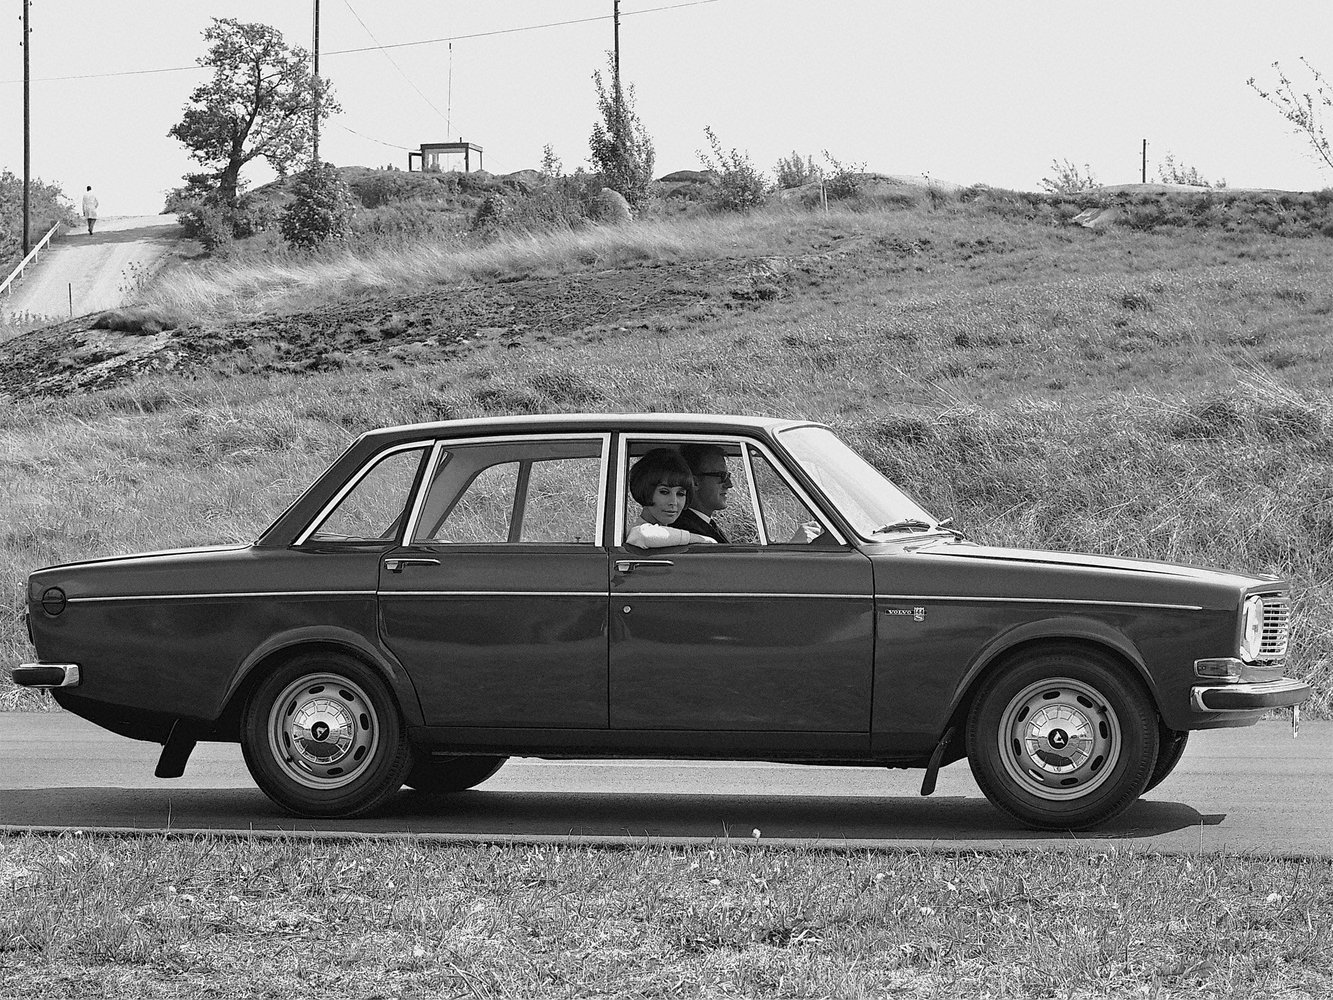 седан Volvo 140 Series 1966 - 1975г выпуска модификация 2.0 AT (124 л.с.)